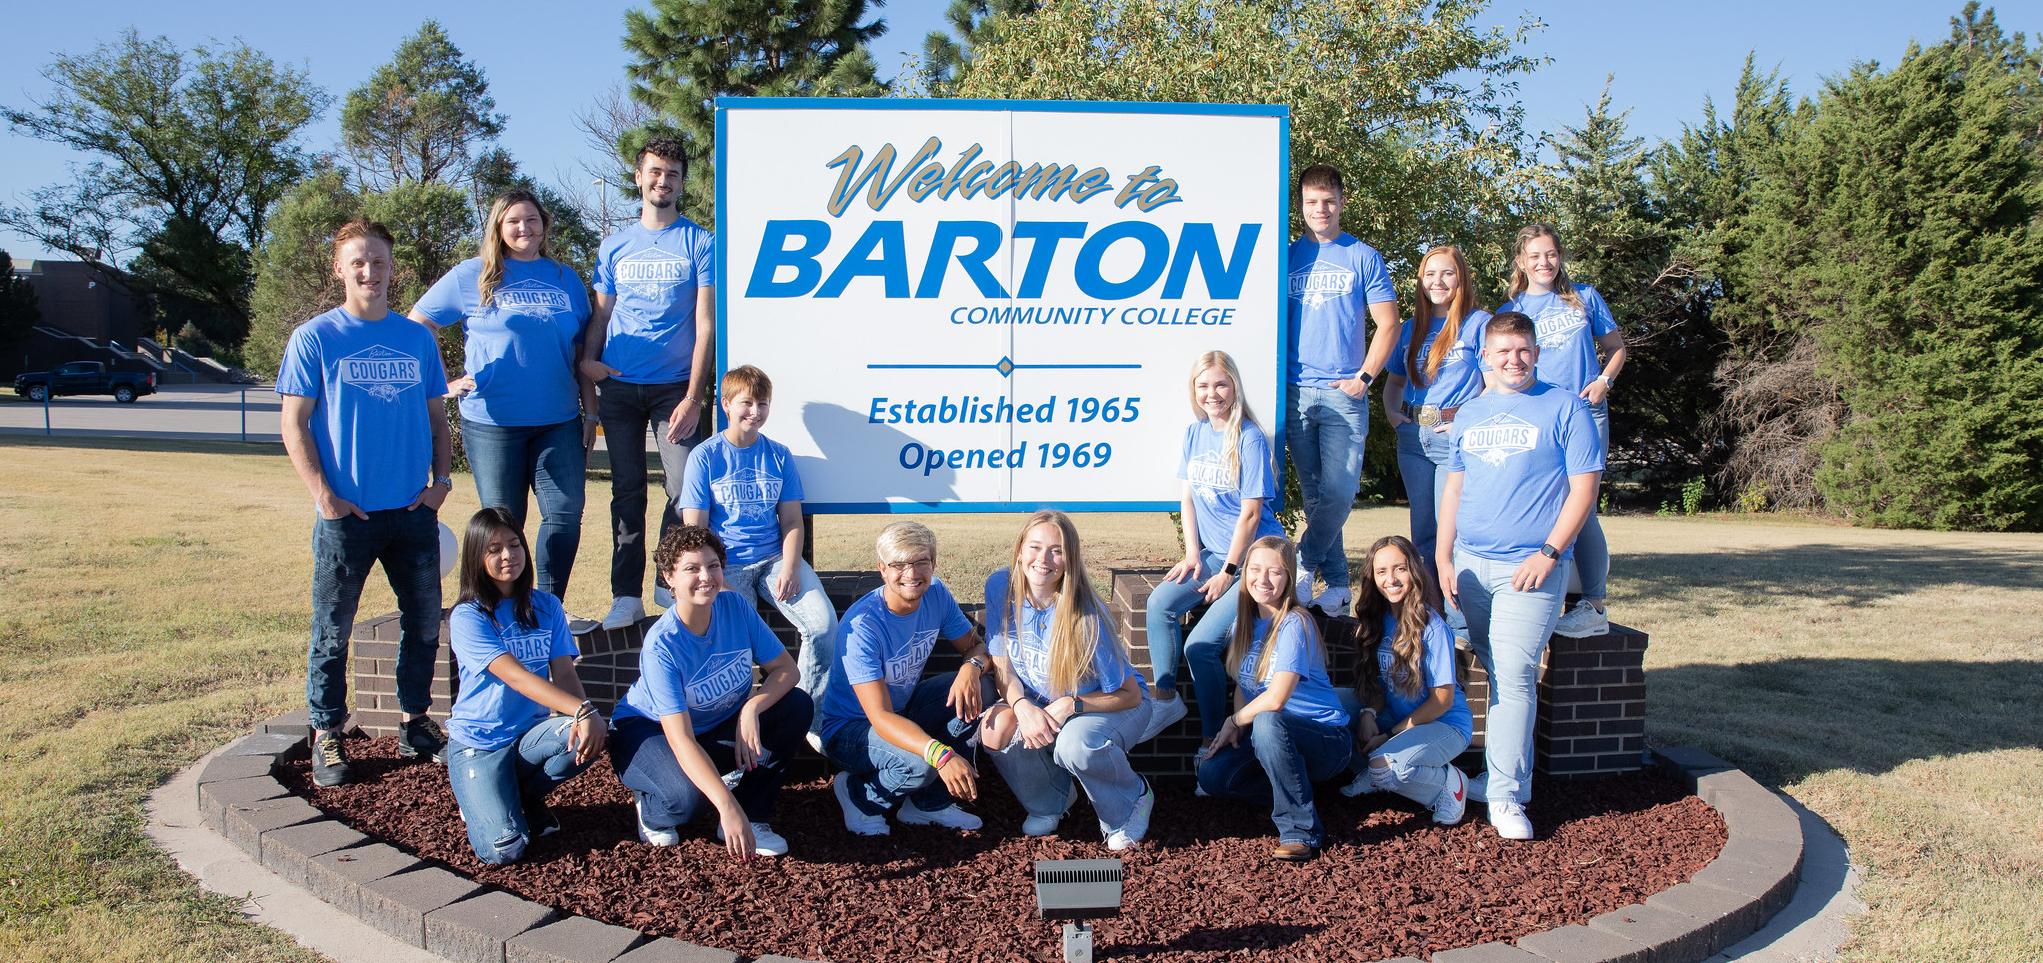 Barton Student Ambassadors pose by the Barton Welcome sign